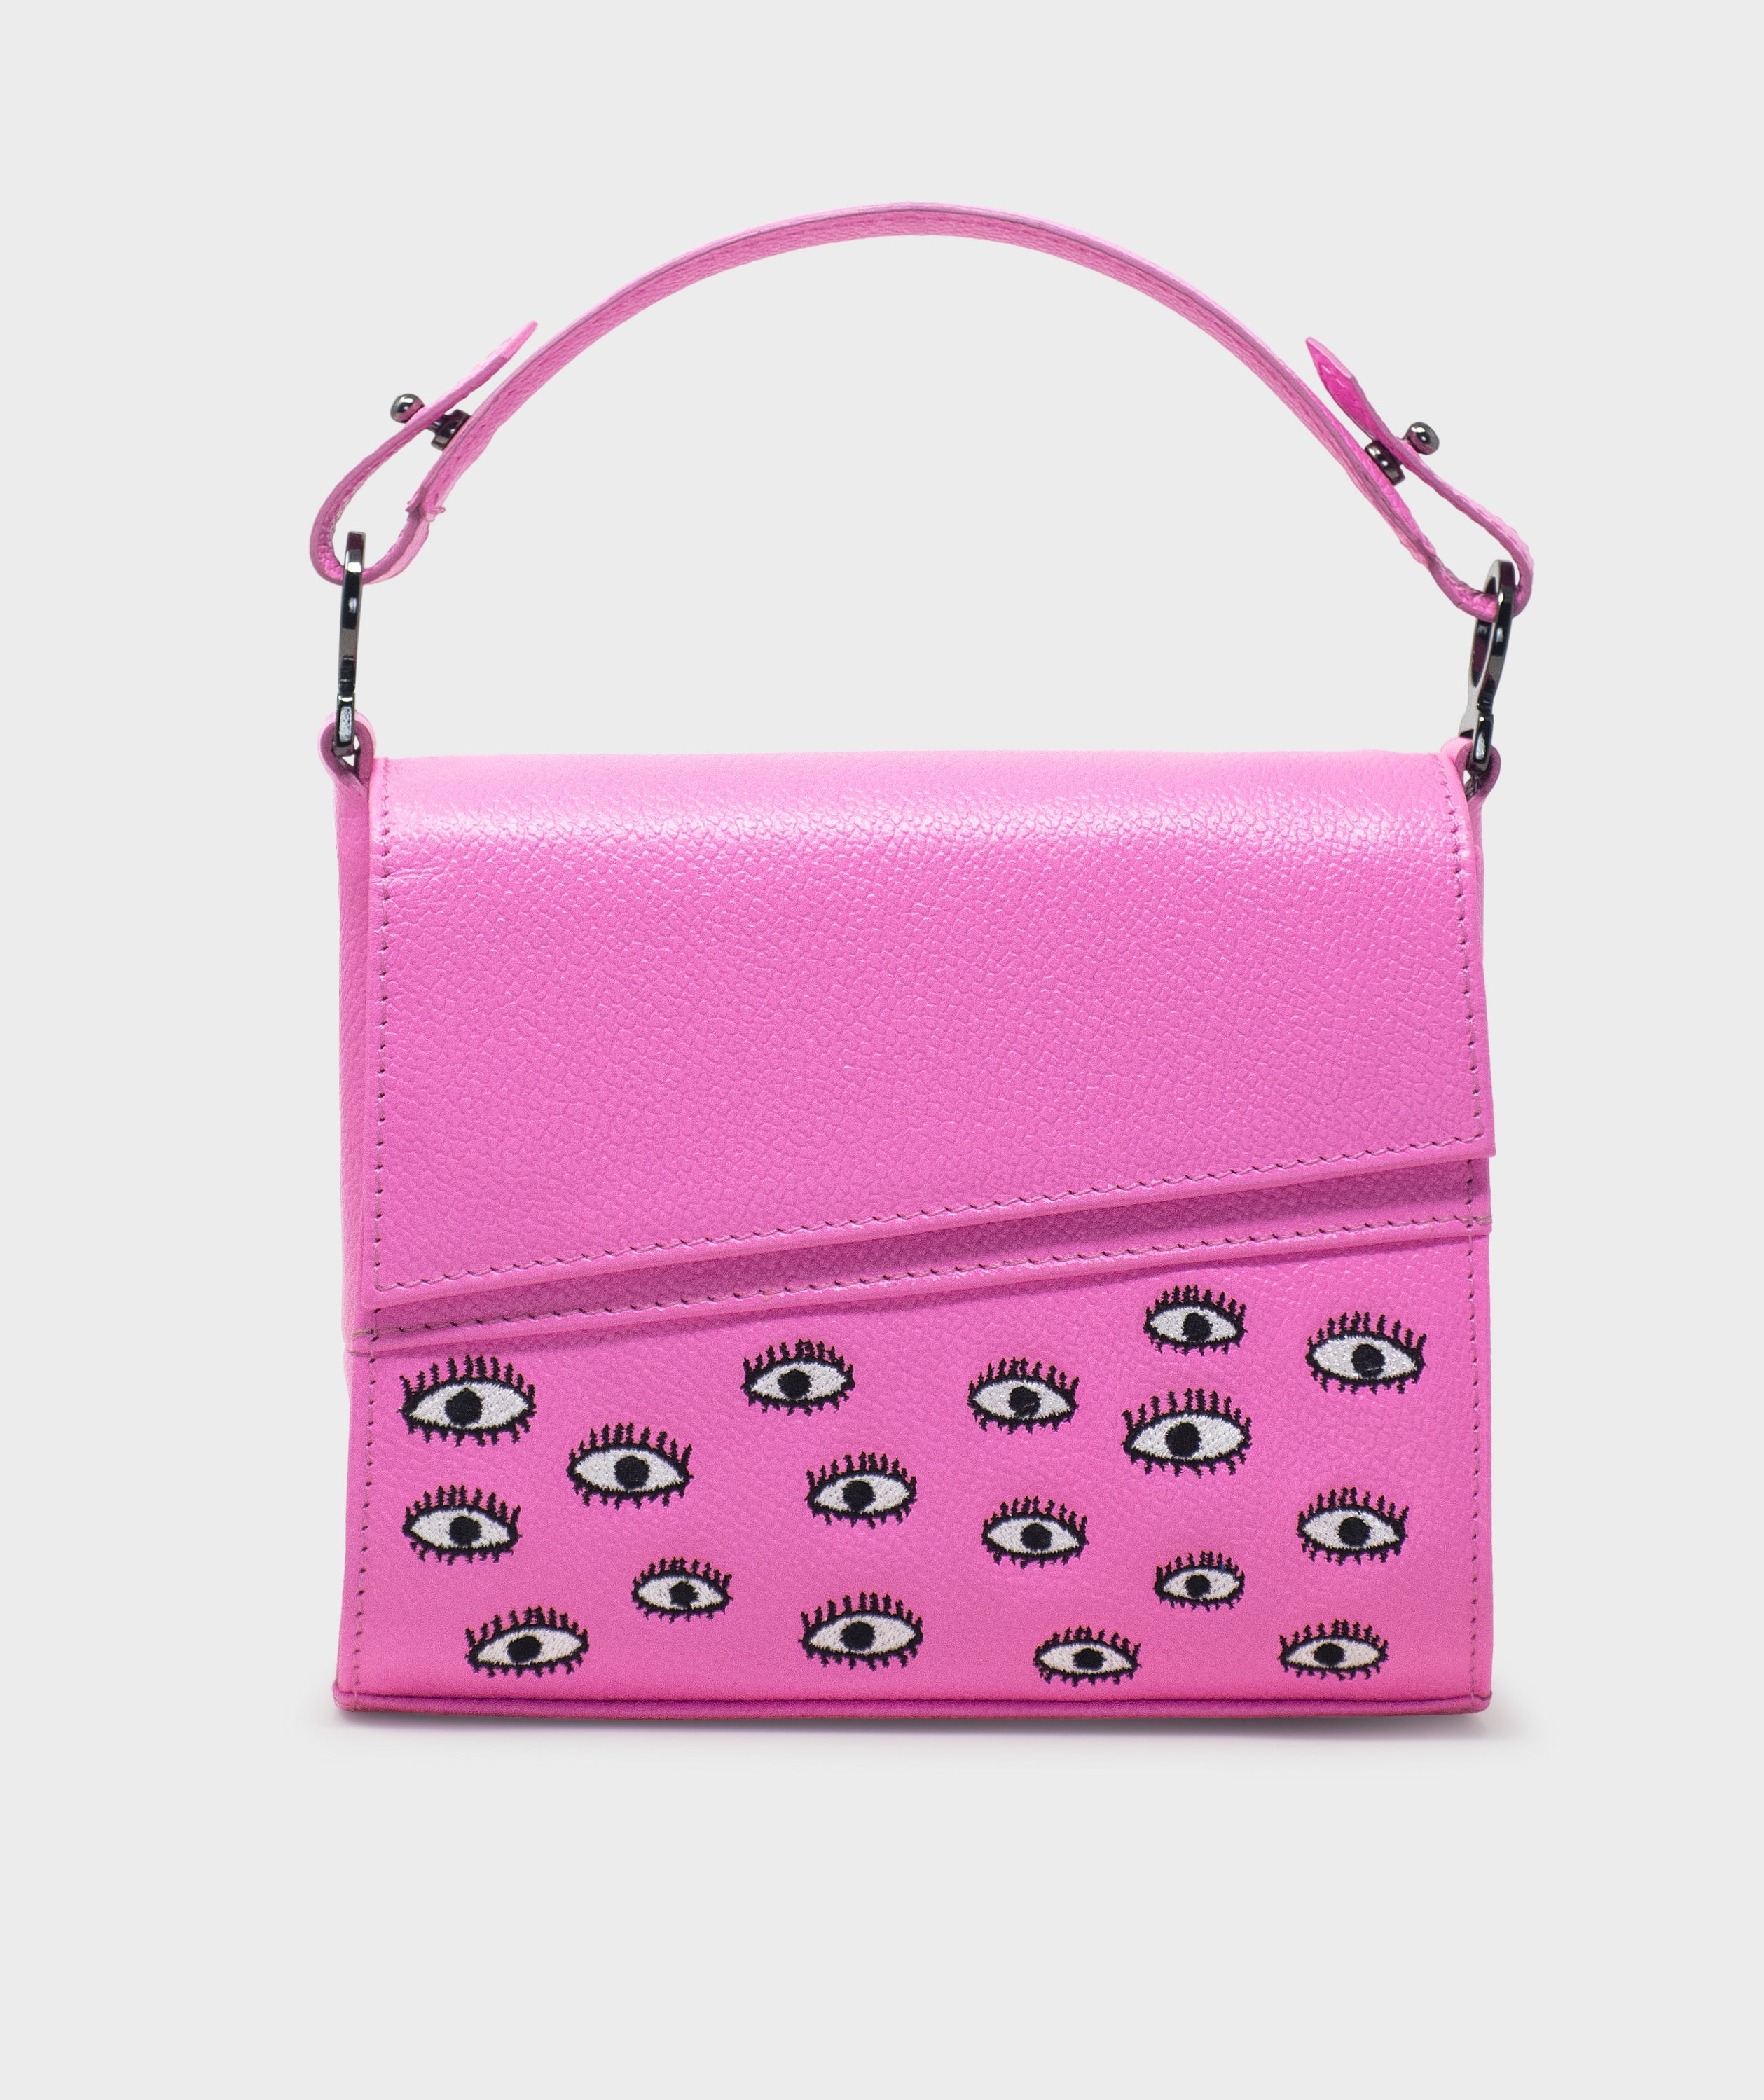 Anastasio Micro Crossbody Handbag Bubblegum Pink Leather - Eyes Embroidery - Front view